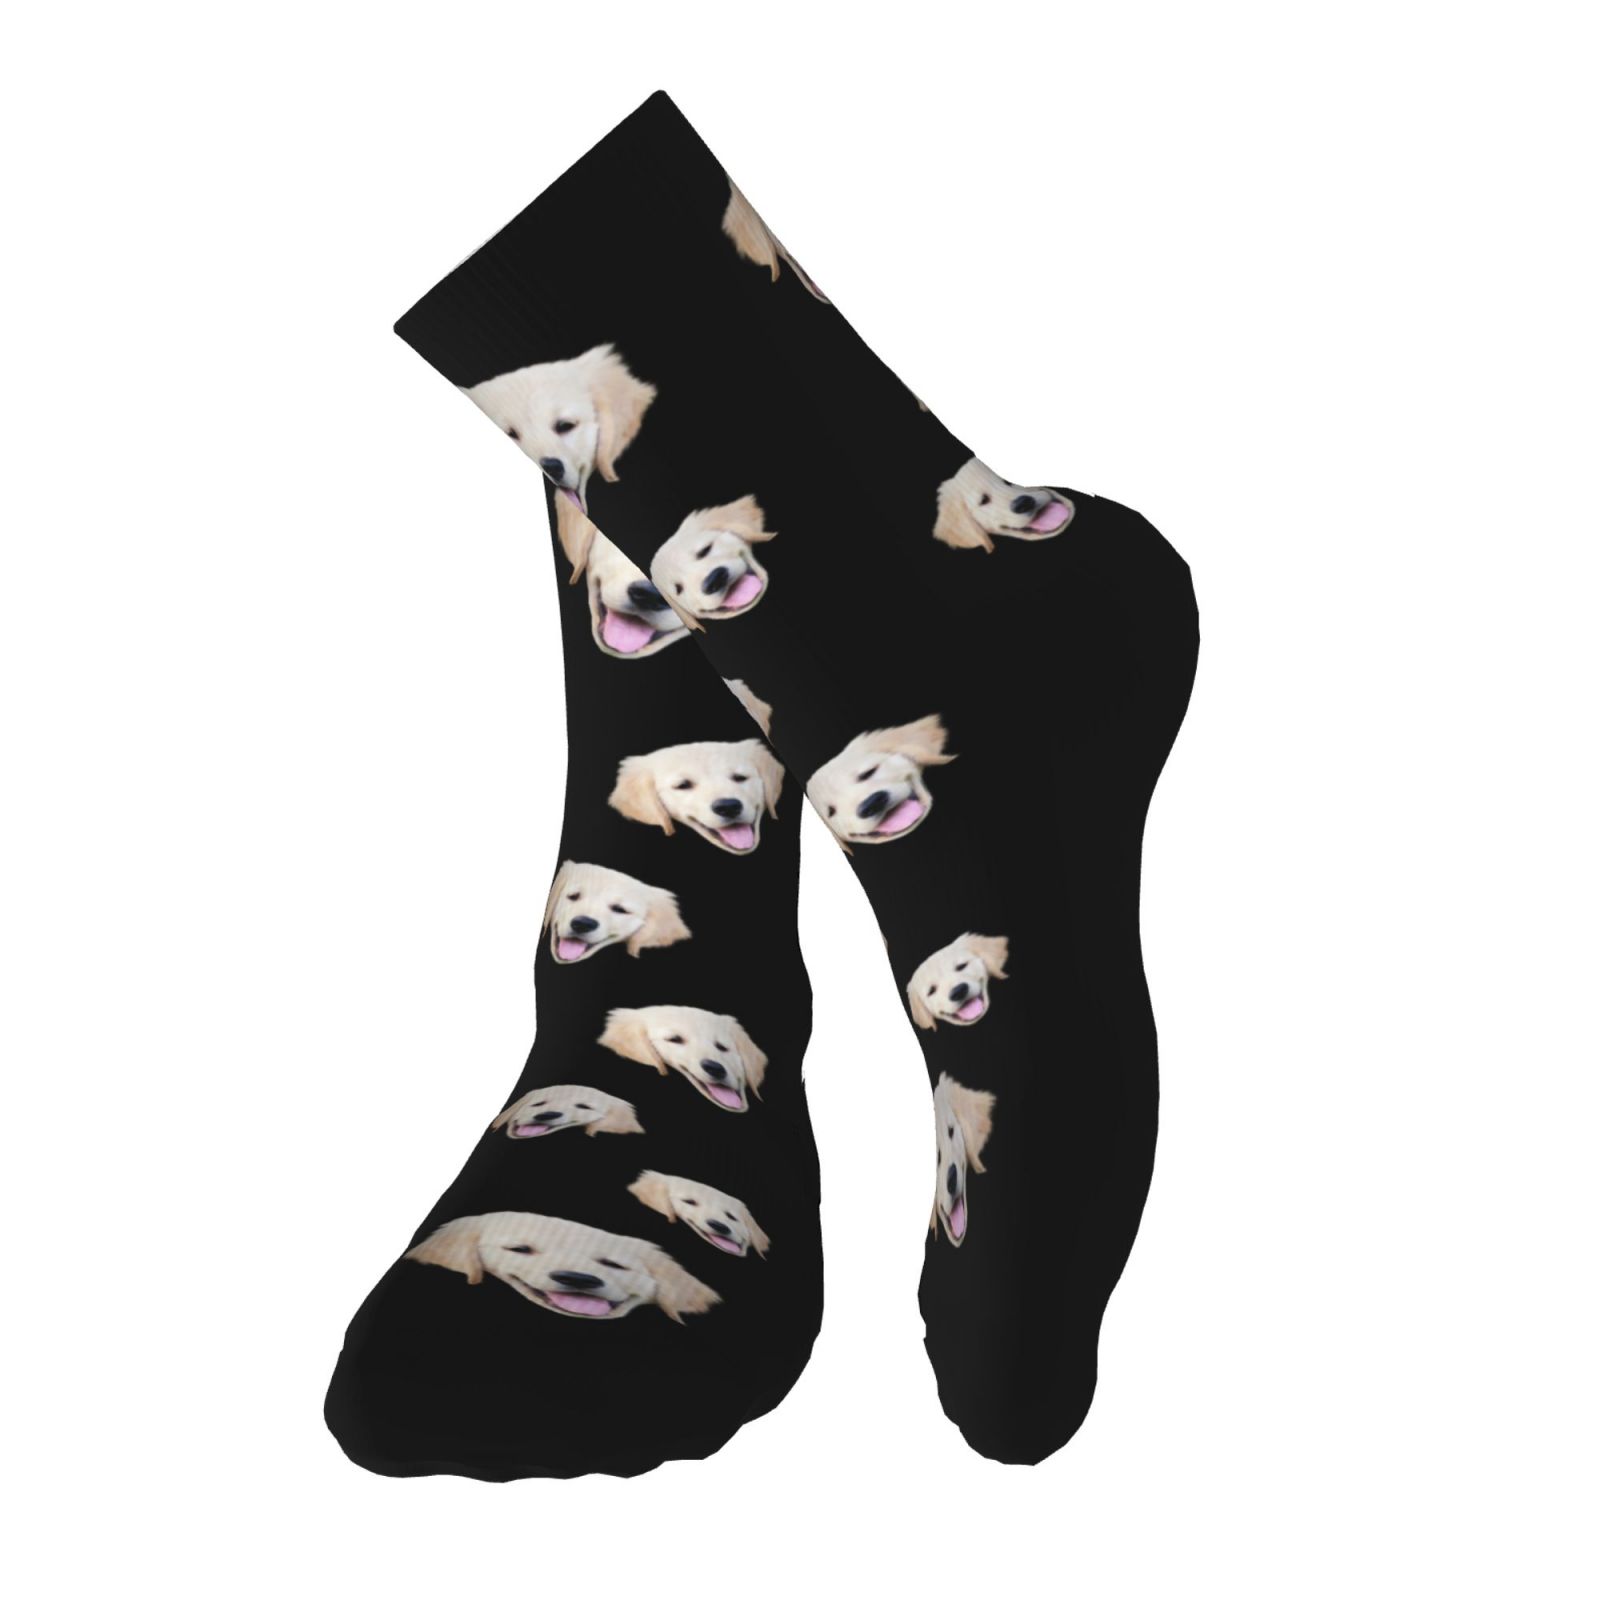 Personalized Printed Photo Socks for Custom Socks